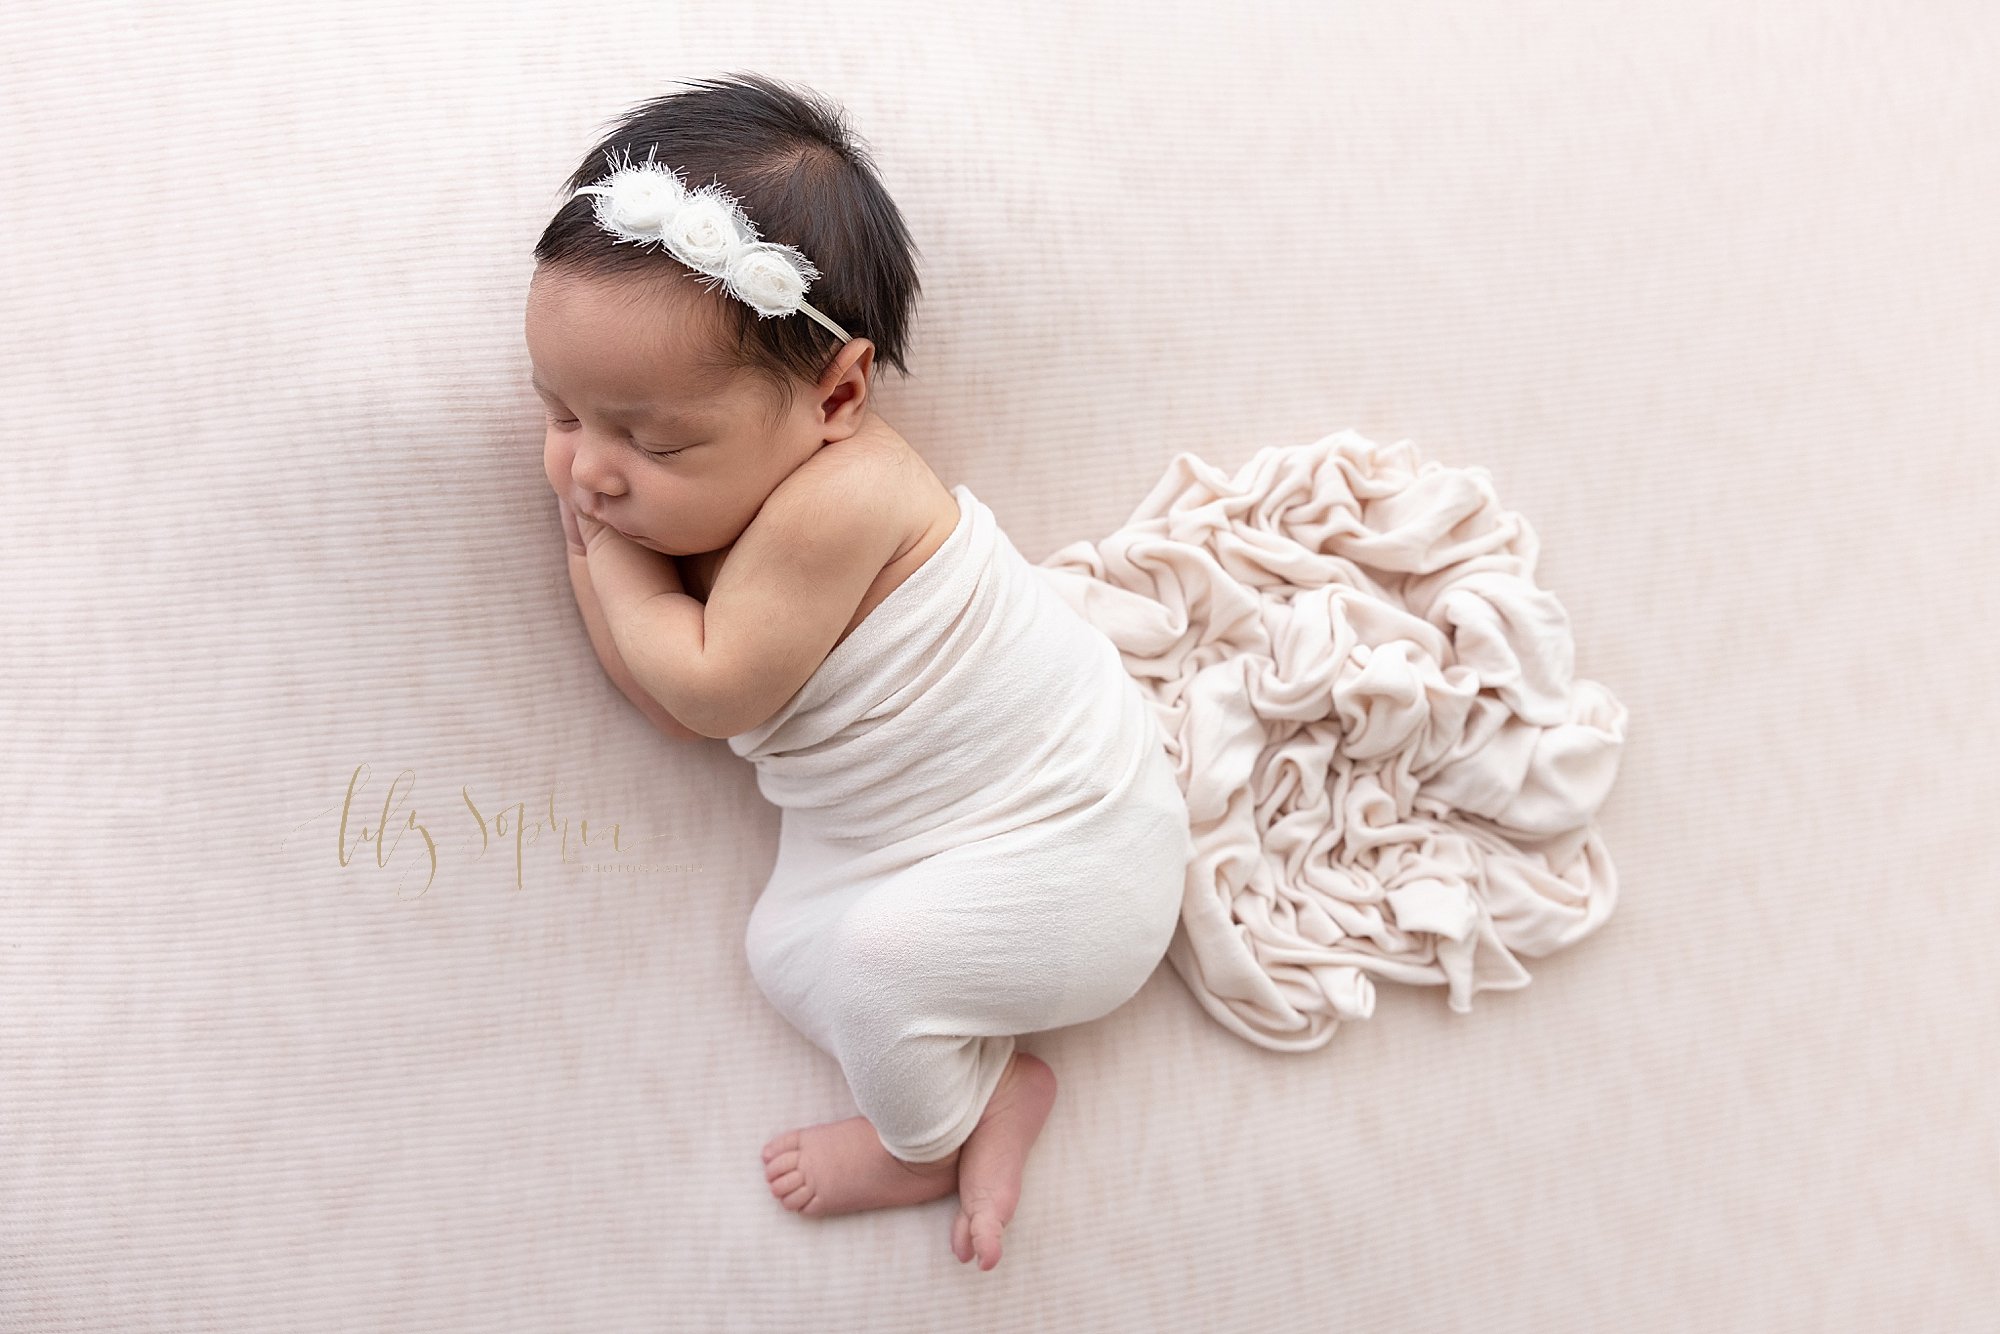 intown-atlanta-decatur-buckhead-studio-newborn-baby-girl-pictures-family-photoshoot_3114.jpg